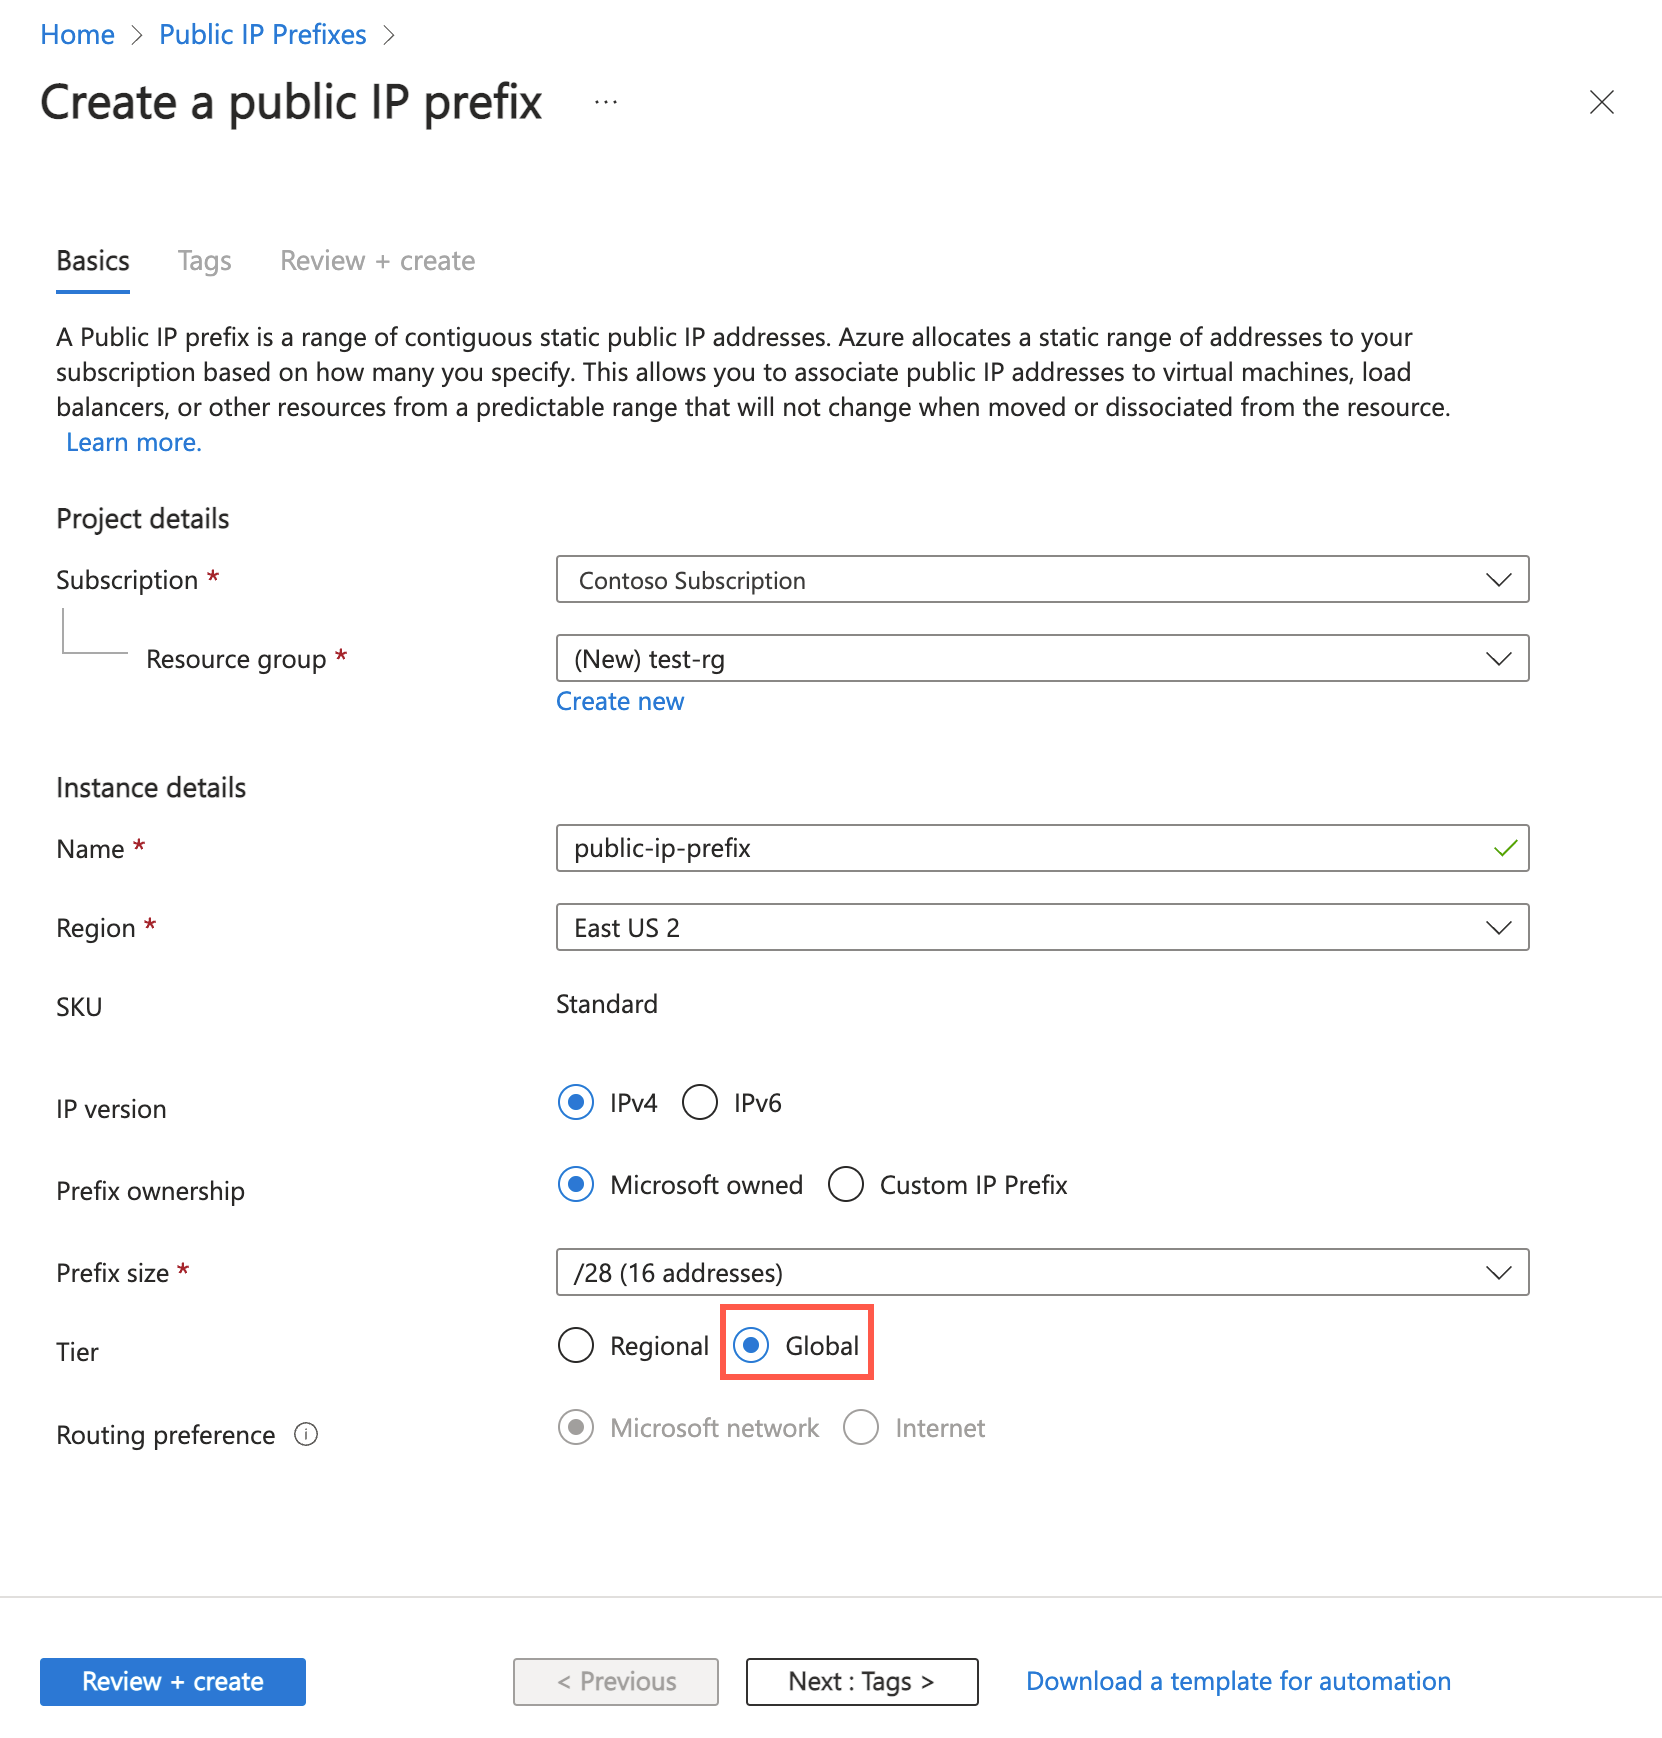 Screenshot of create public IP address prefix with global tier in the Azure portal.